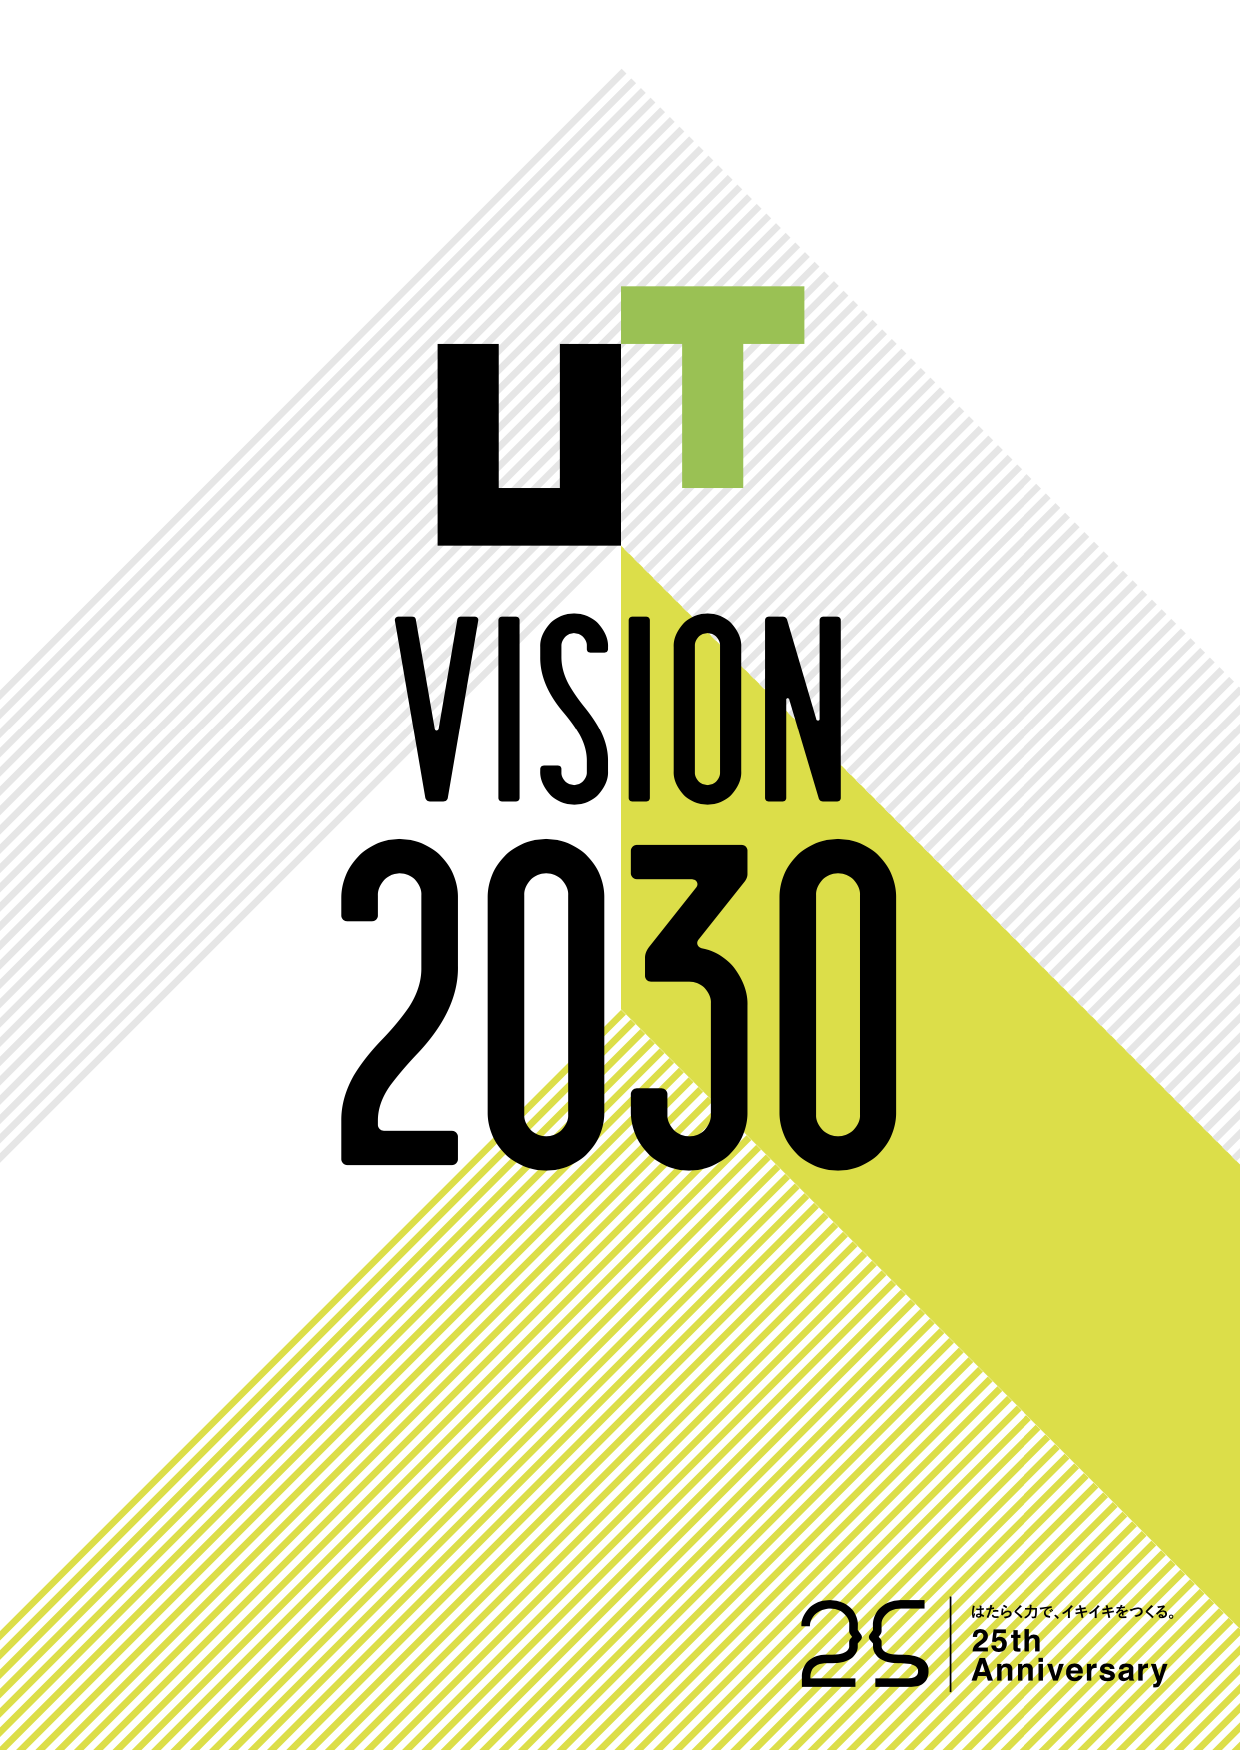 UT VISION 2030